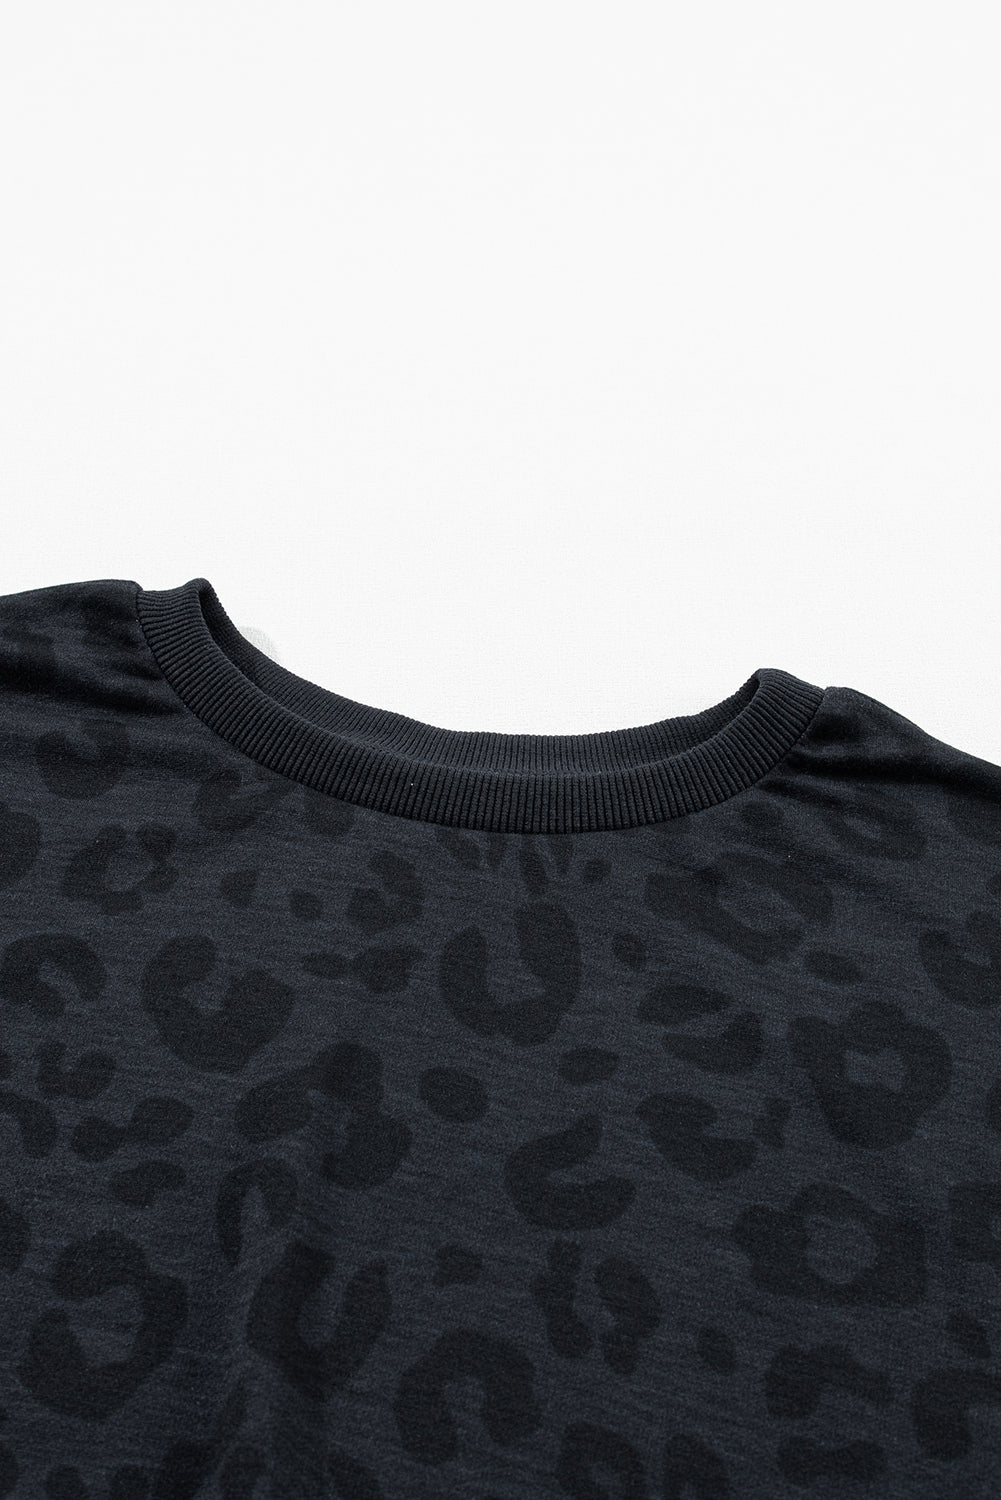 Leopard Long Sleeve Satin Tie Shorts - Two Piece Set in Grey